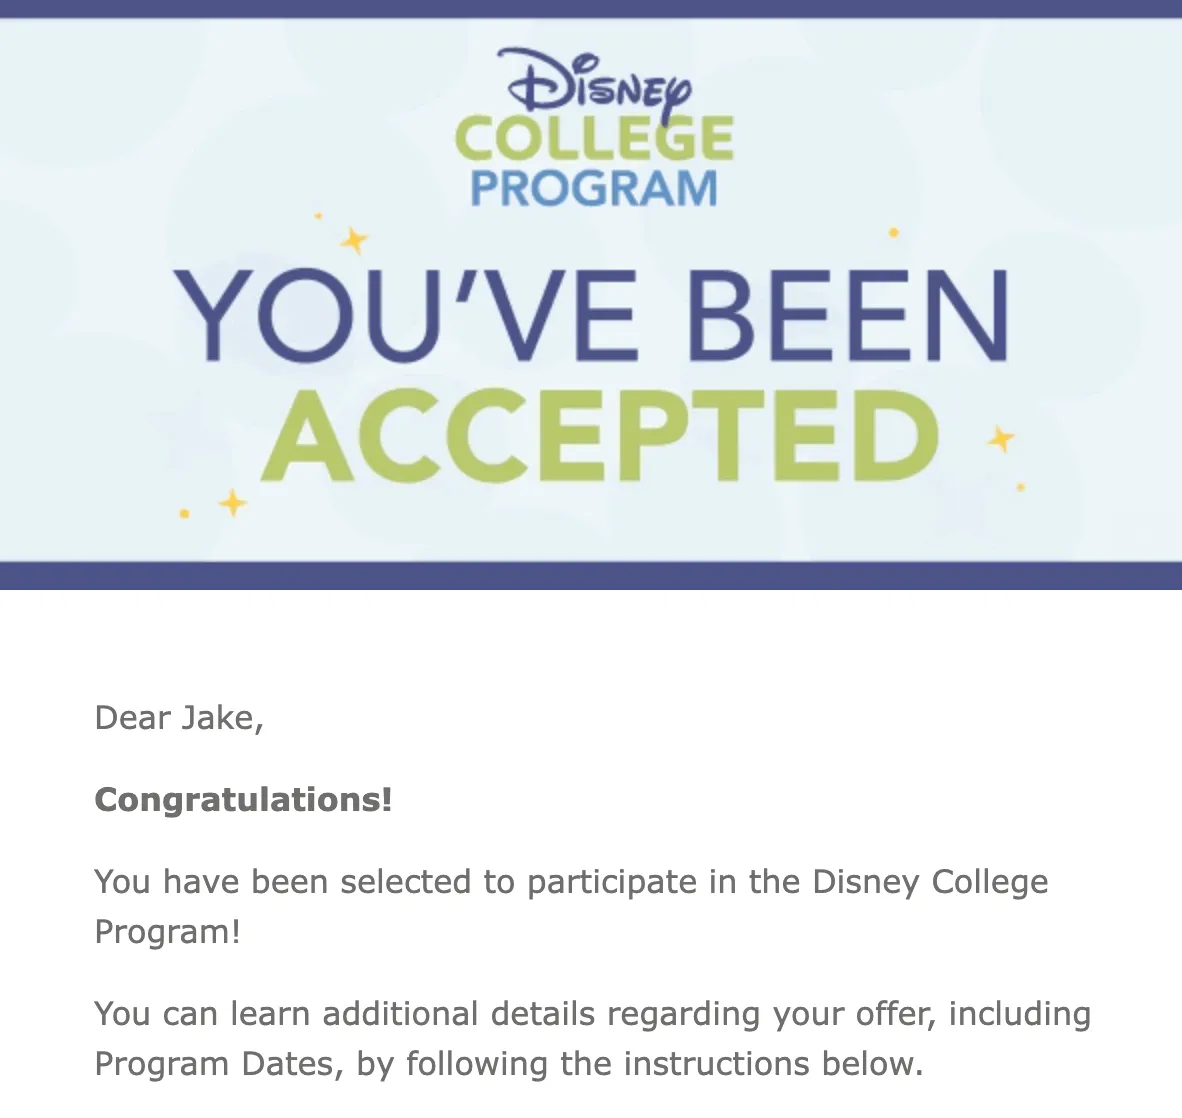 Disney College Program Acceptance Rate